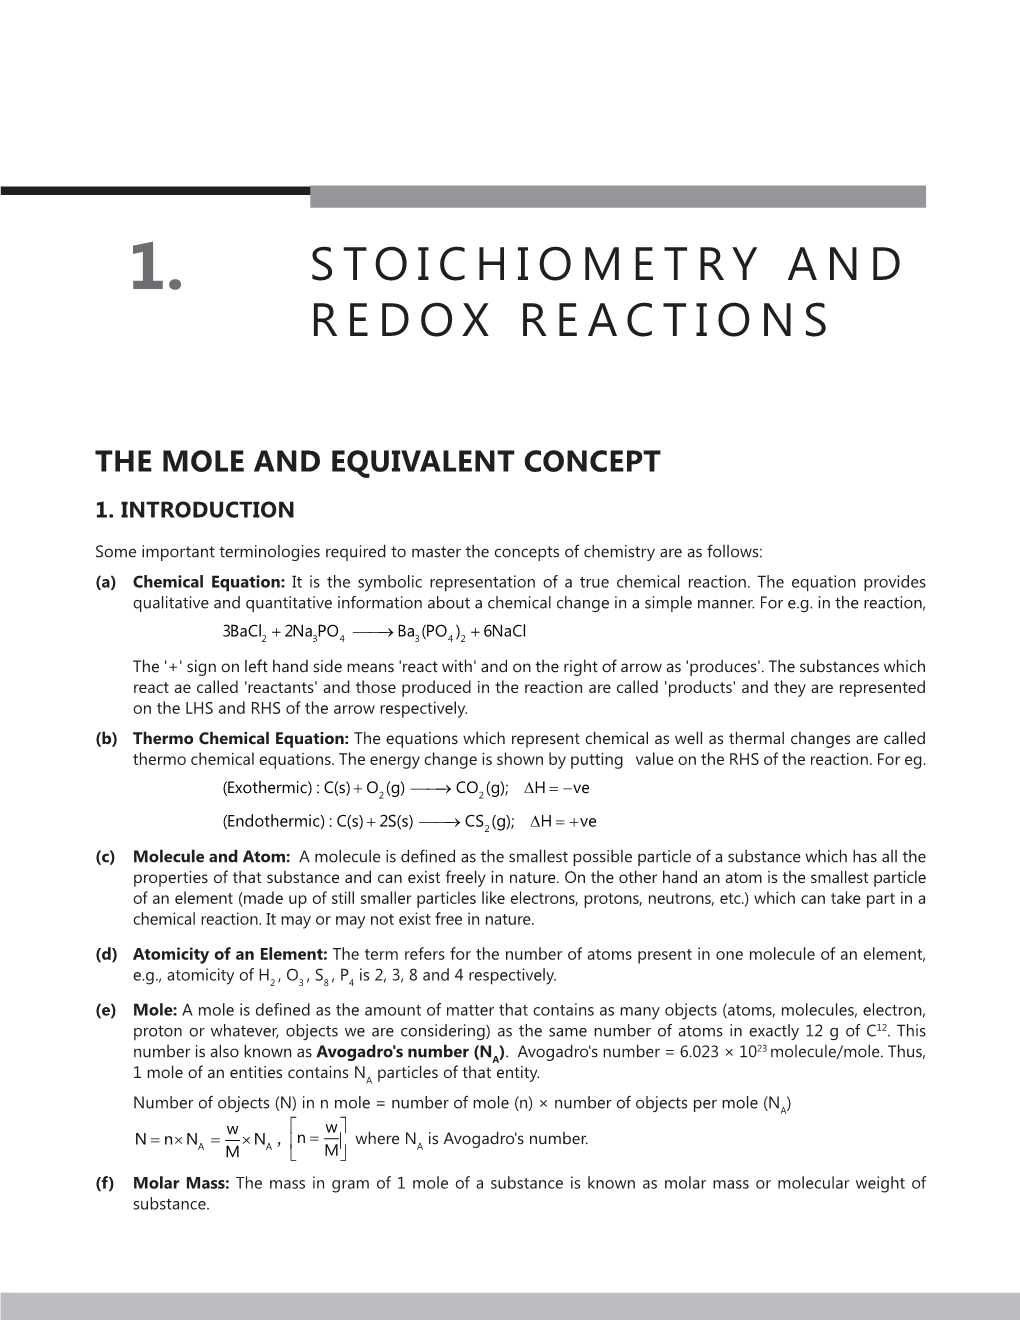 Stoichiometry and Redox Reactions